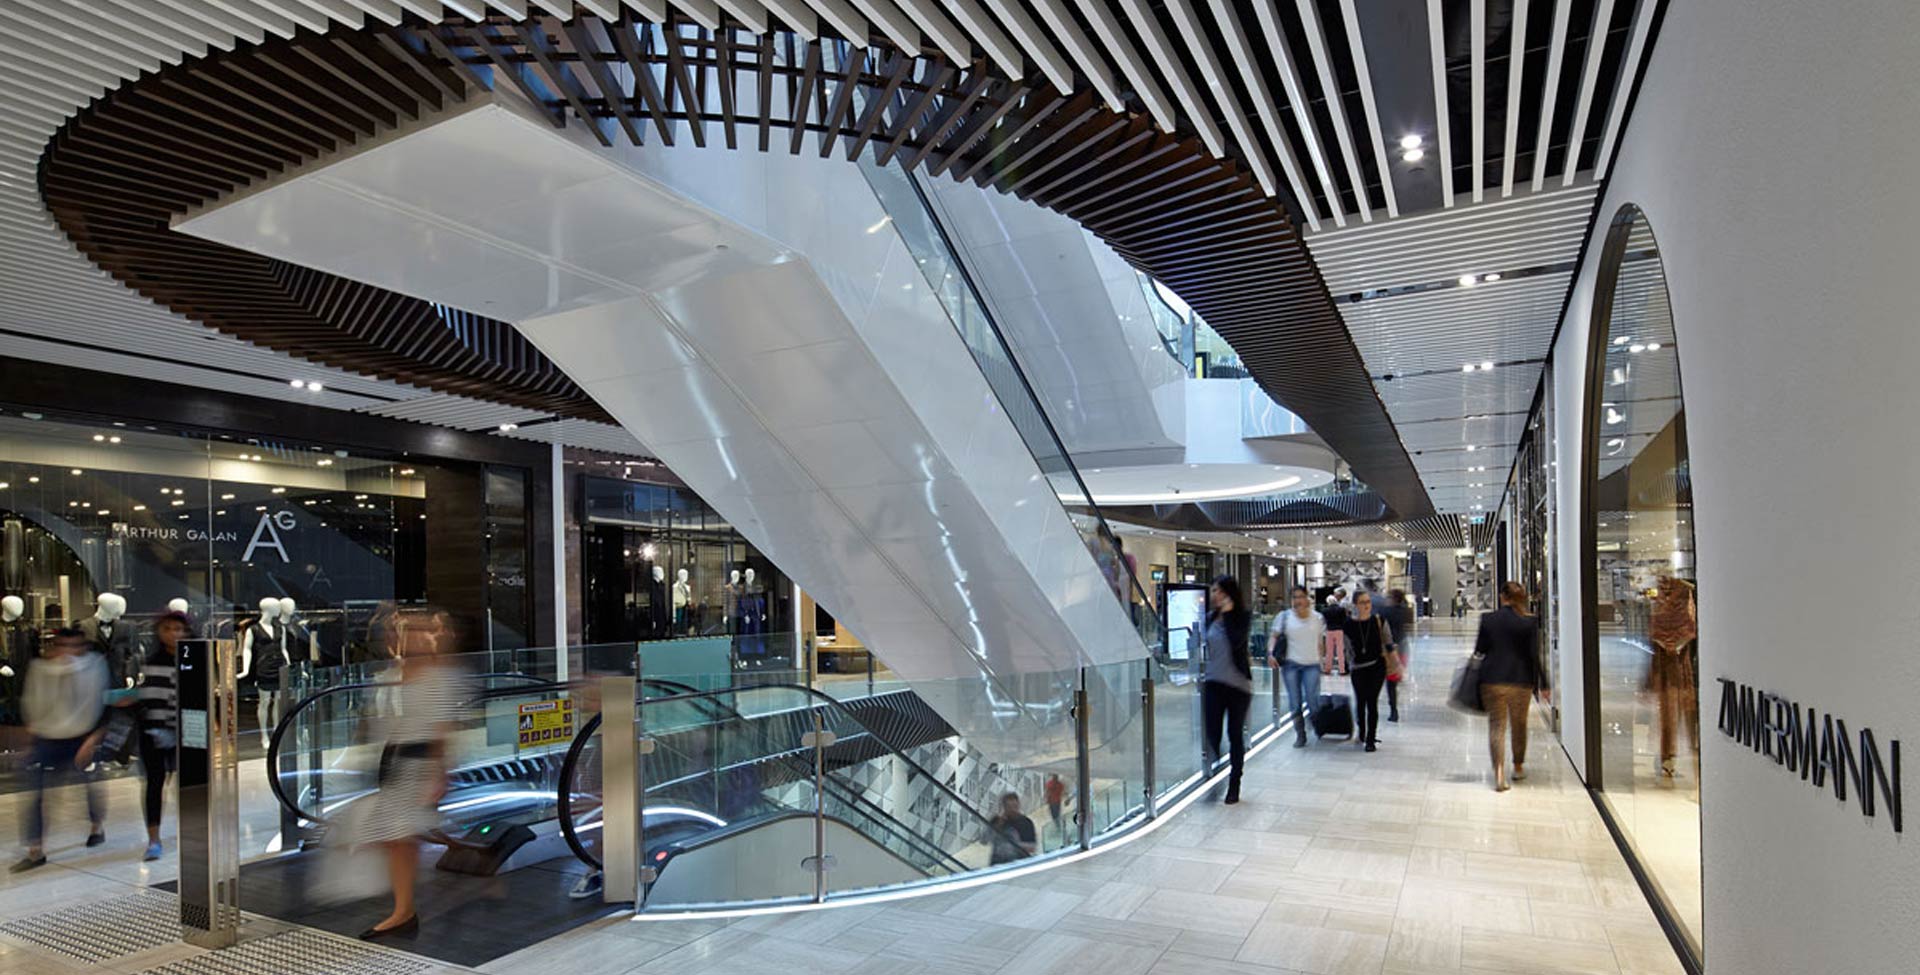 Emporium Mall Melbourne - successful design and branding concepts escalator circulation